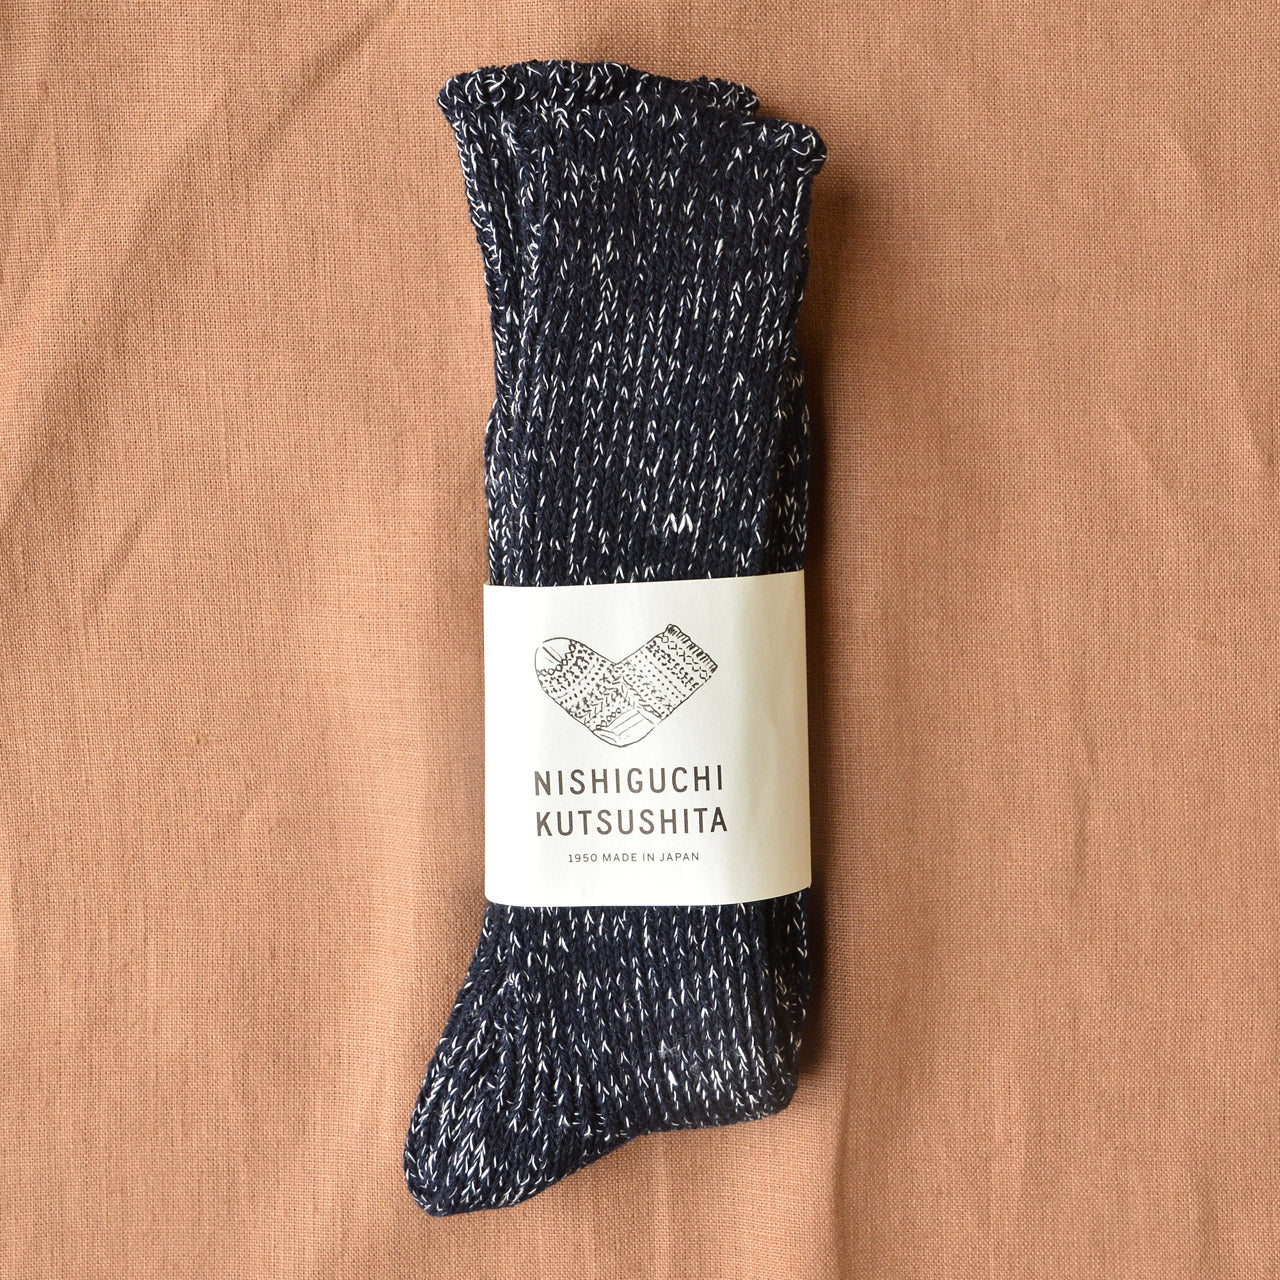 Hemp and Cotton Socks by Nishiguchi Kutsushita, Japan from Woollykins